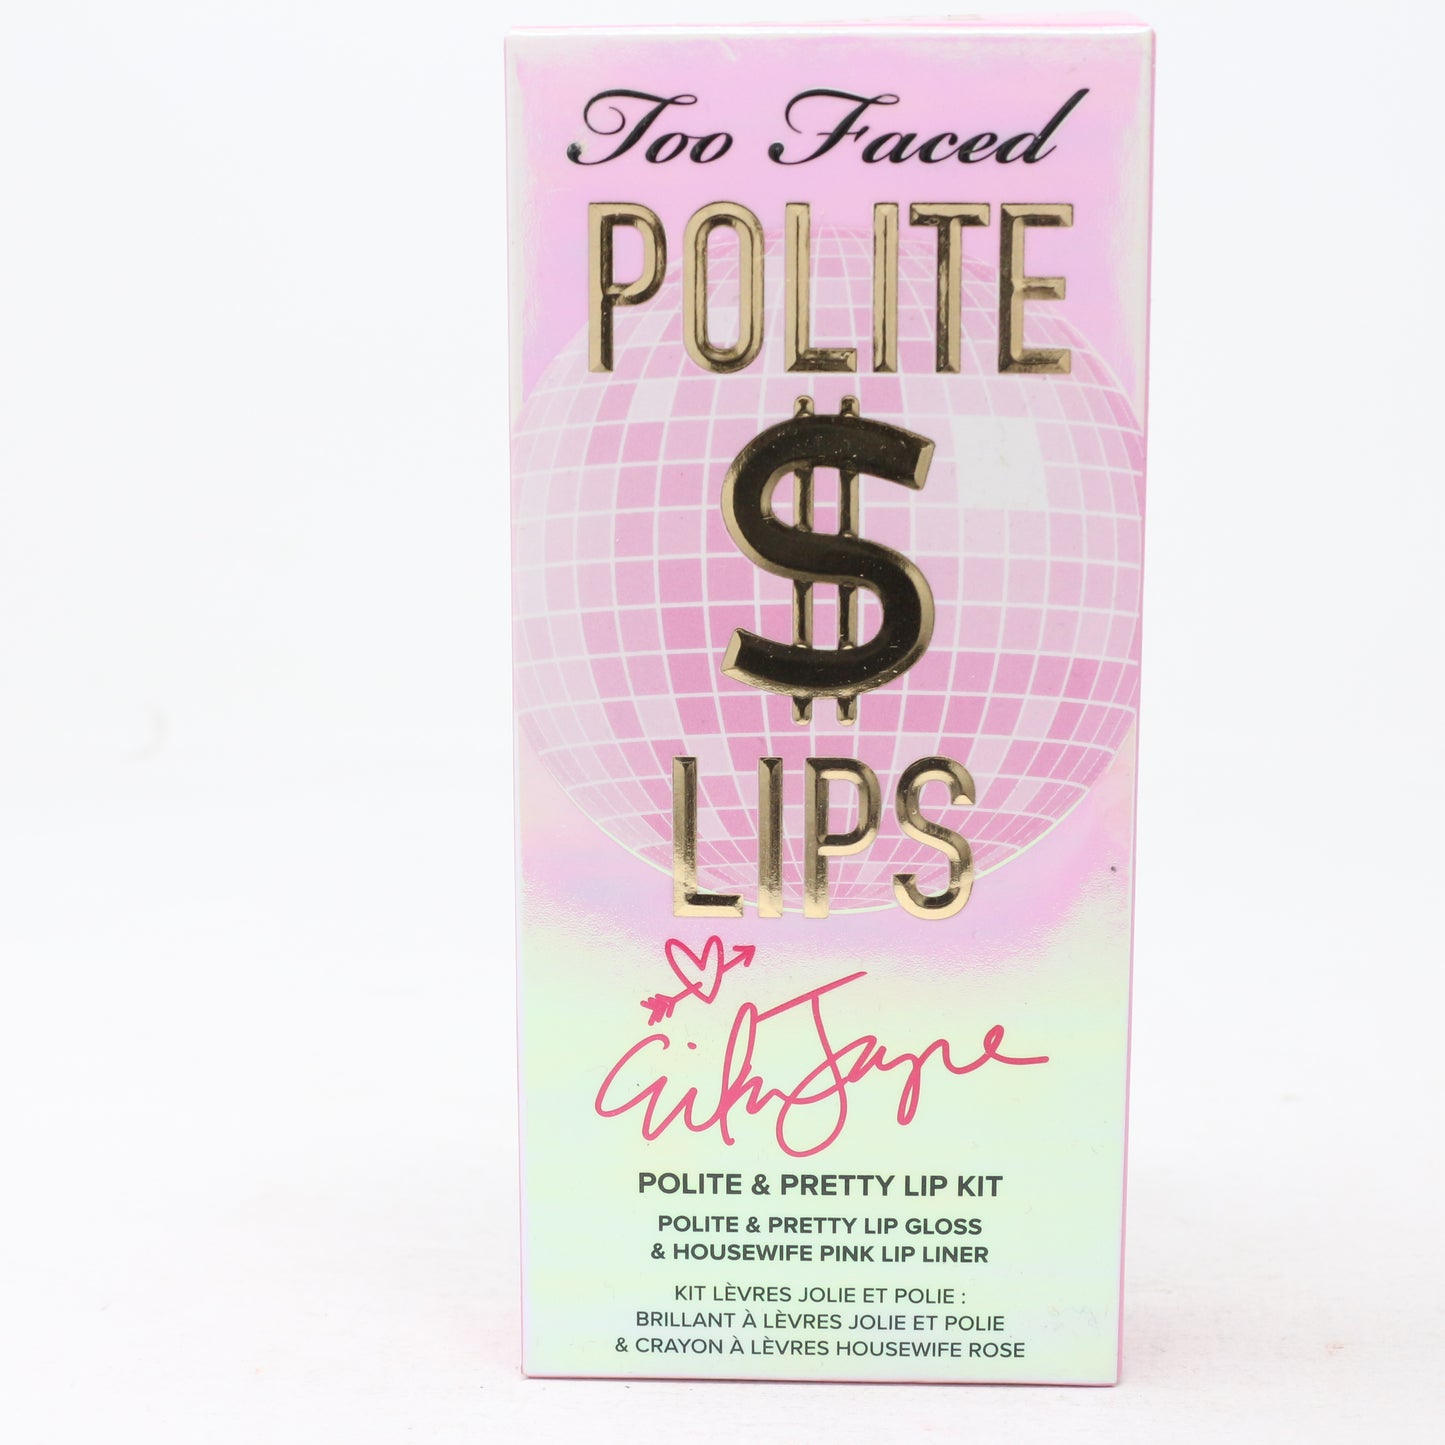 Polite $ Polite & Pretty Lip Kit